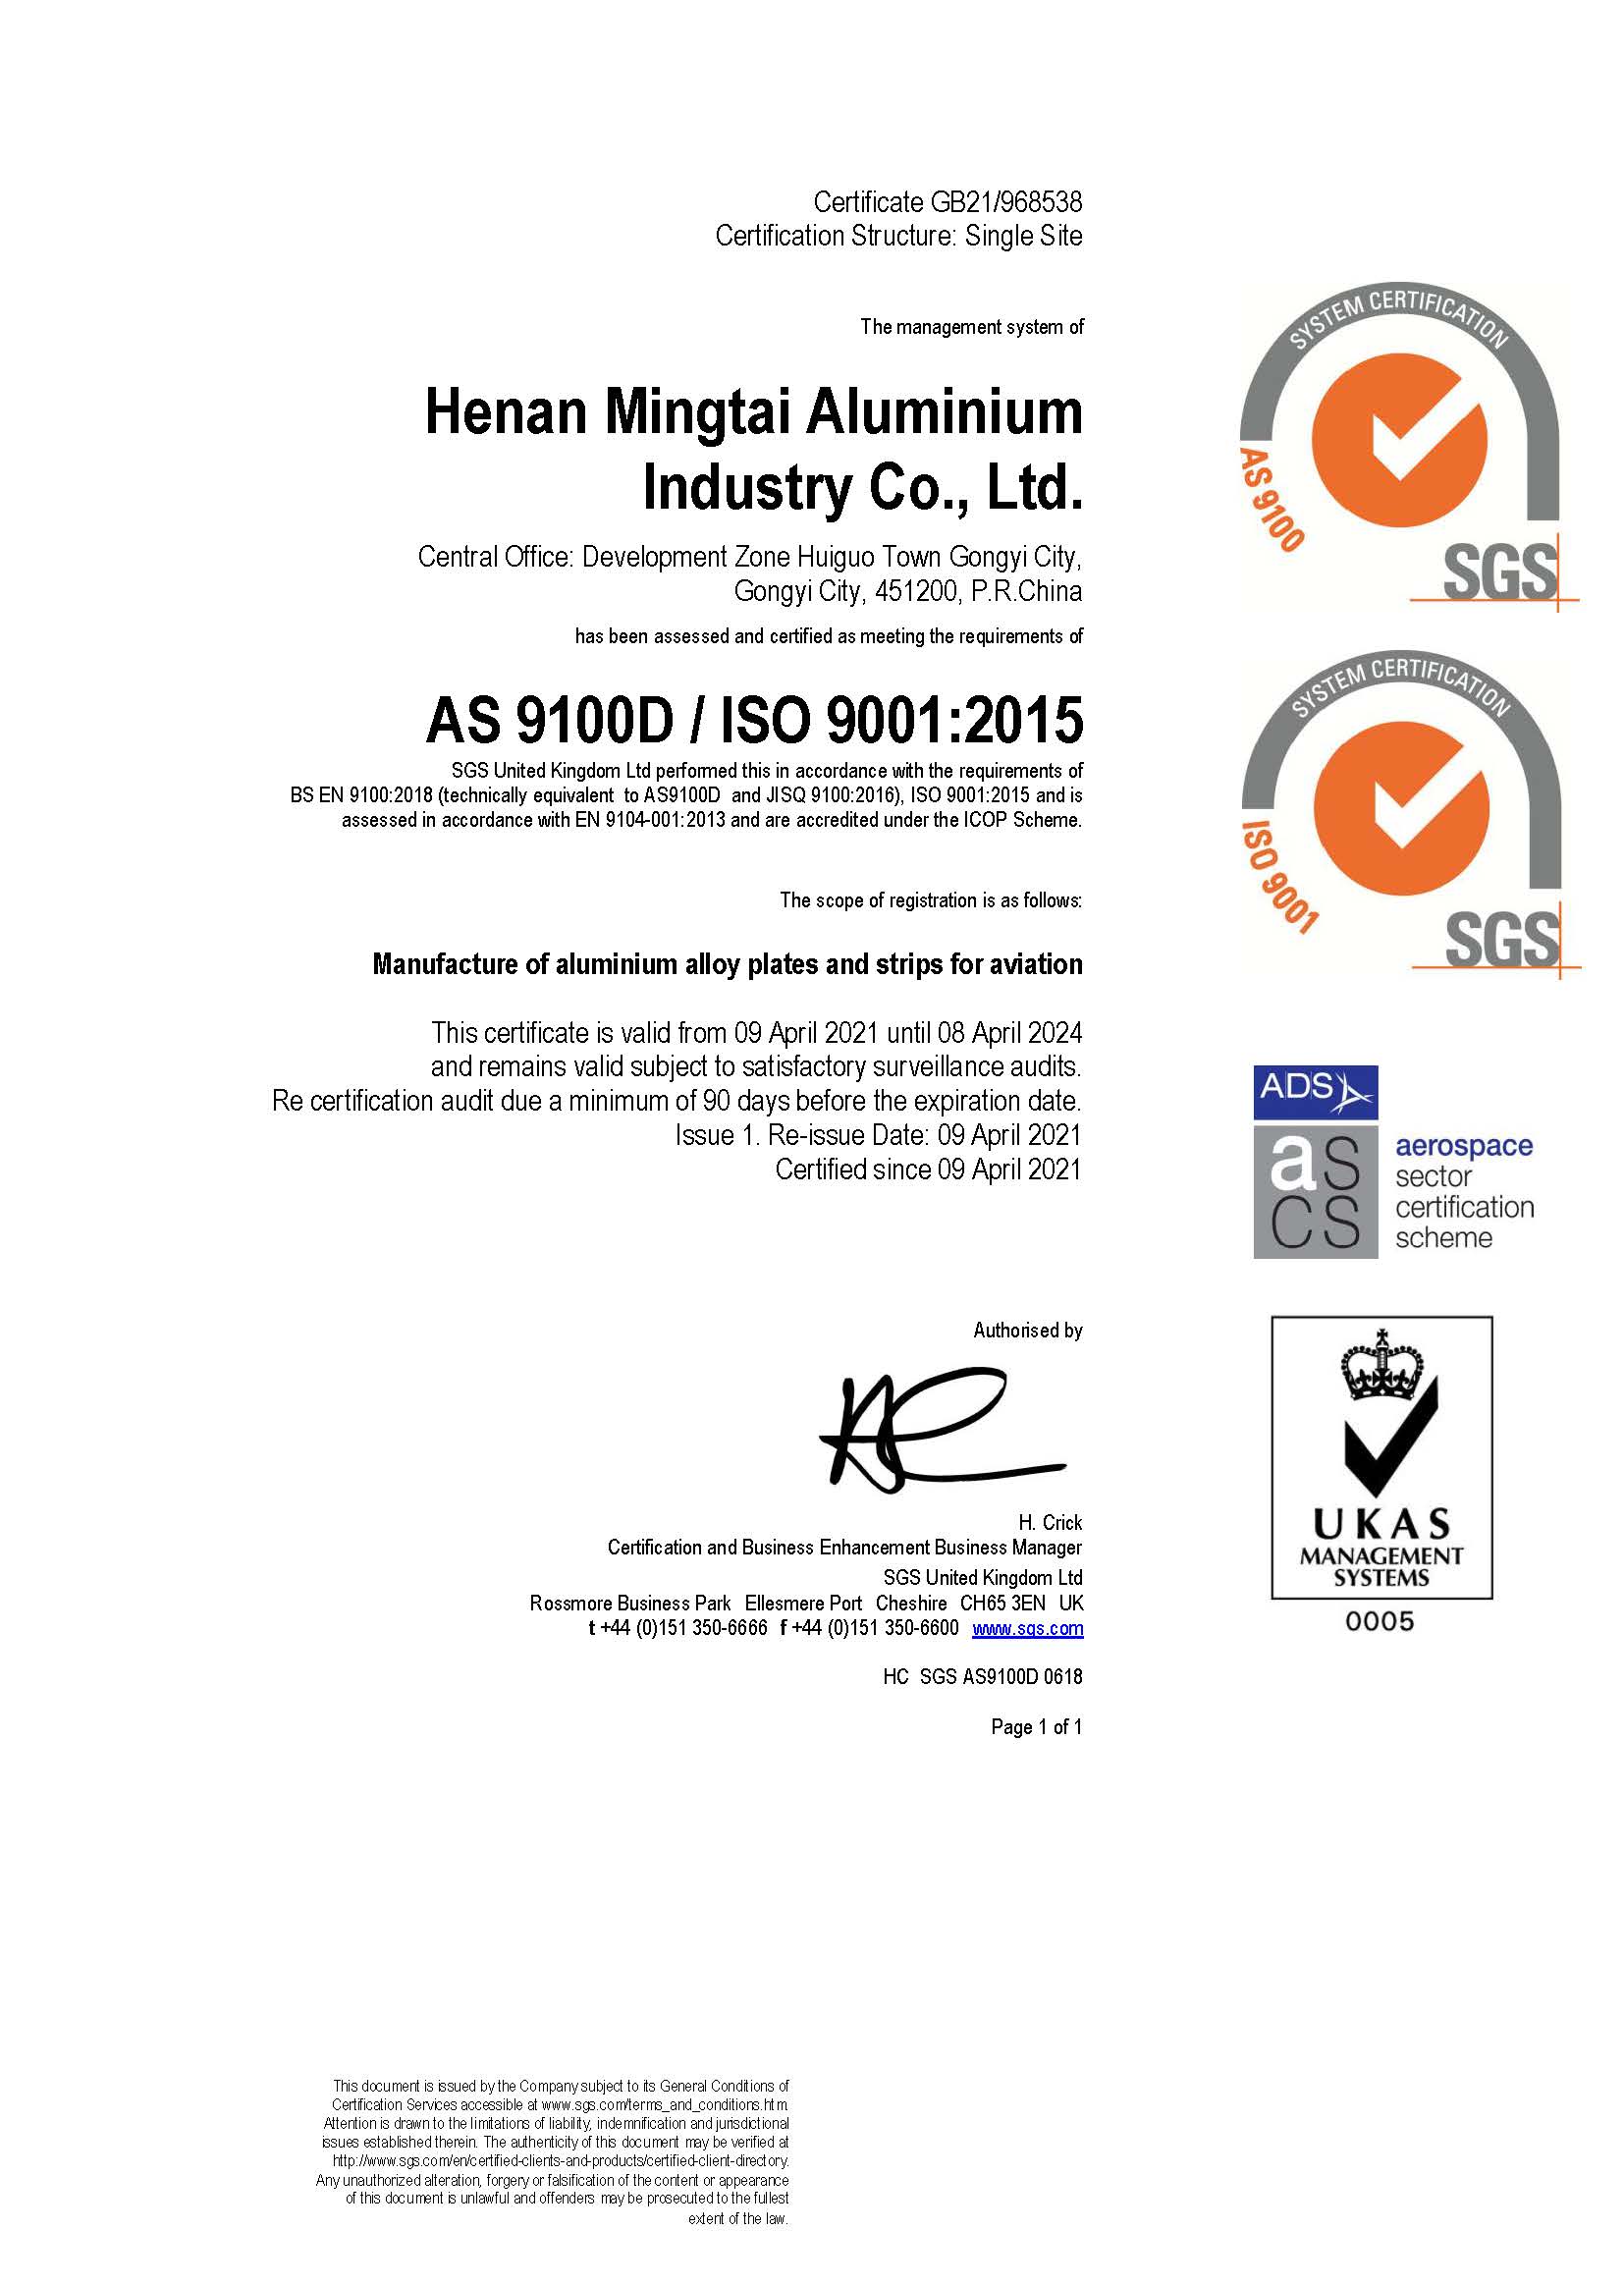 AS 9100D/ISO 9001:2015